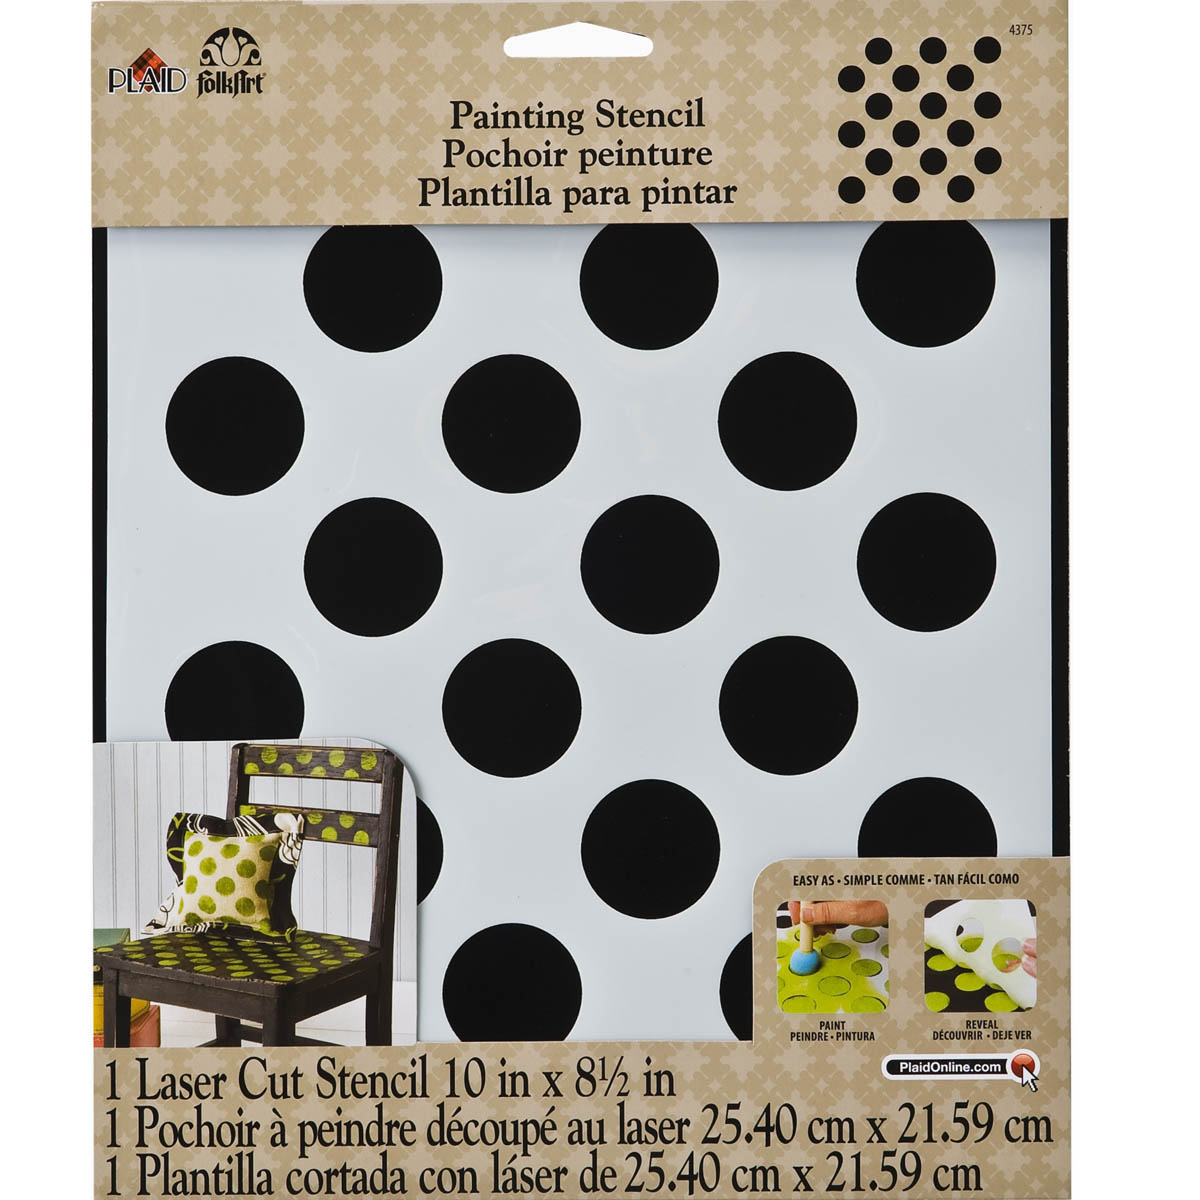 FolkArt ® Painting Stencils - Large - Polka Dot - 4375